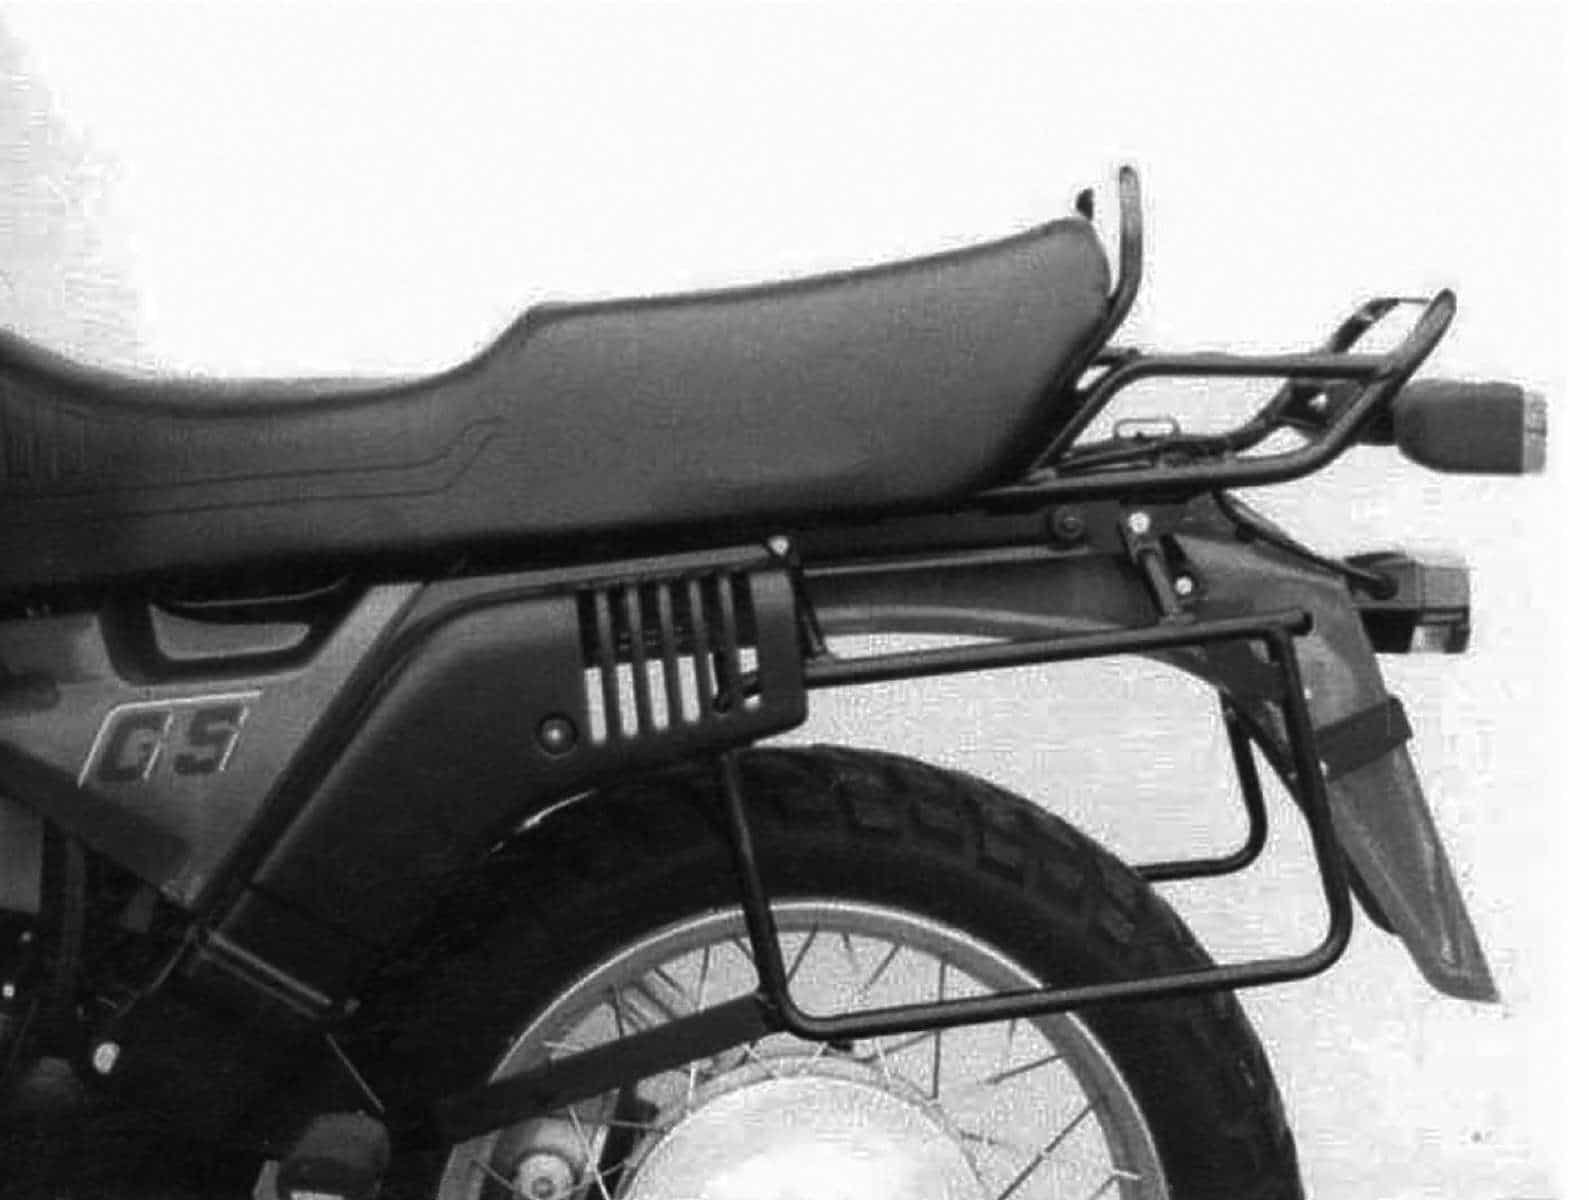 Sidecarrier permanent mounted black for BMW R 100 GS Paris-Dakar (1989-1996)